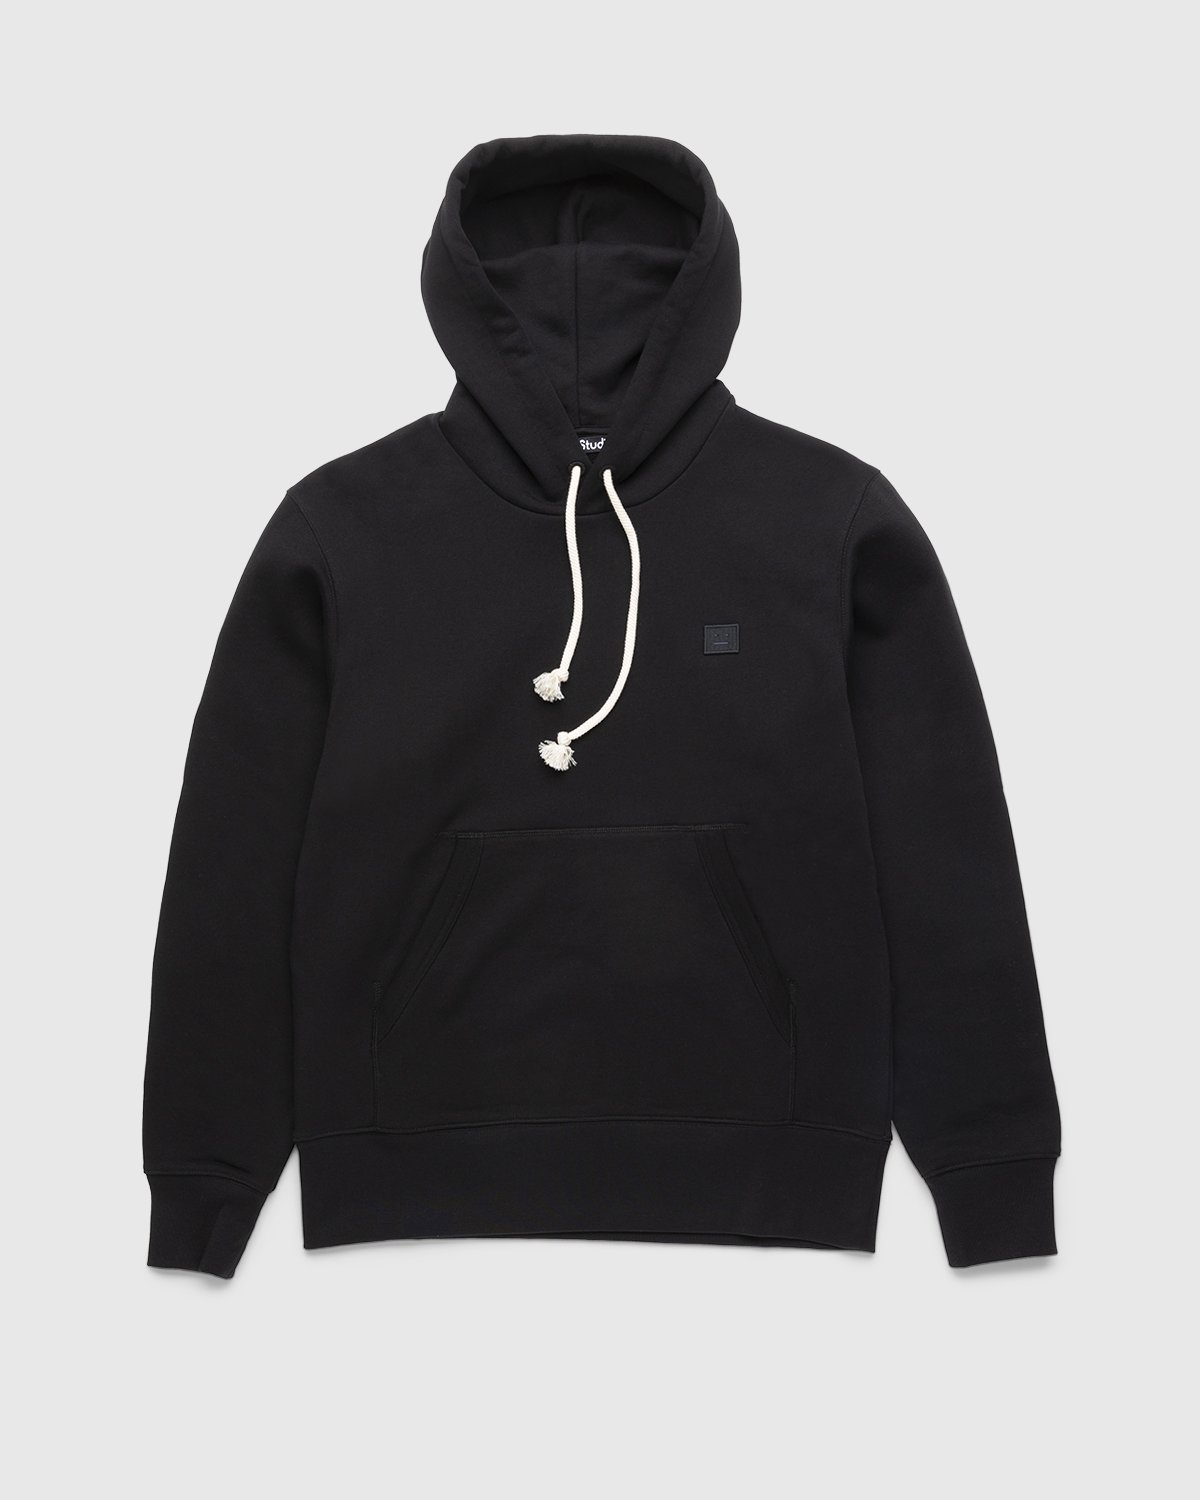 Acne Studios - Organic Cotton Hooded Sweatshirt Black - Clothing - Black - Image 1